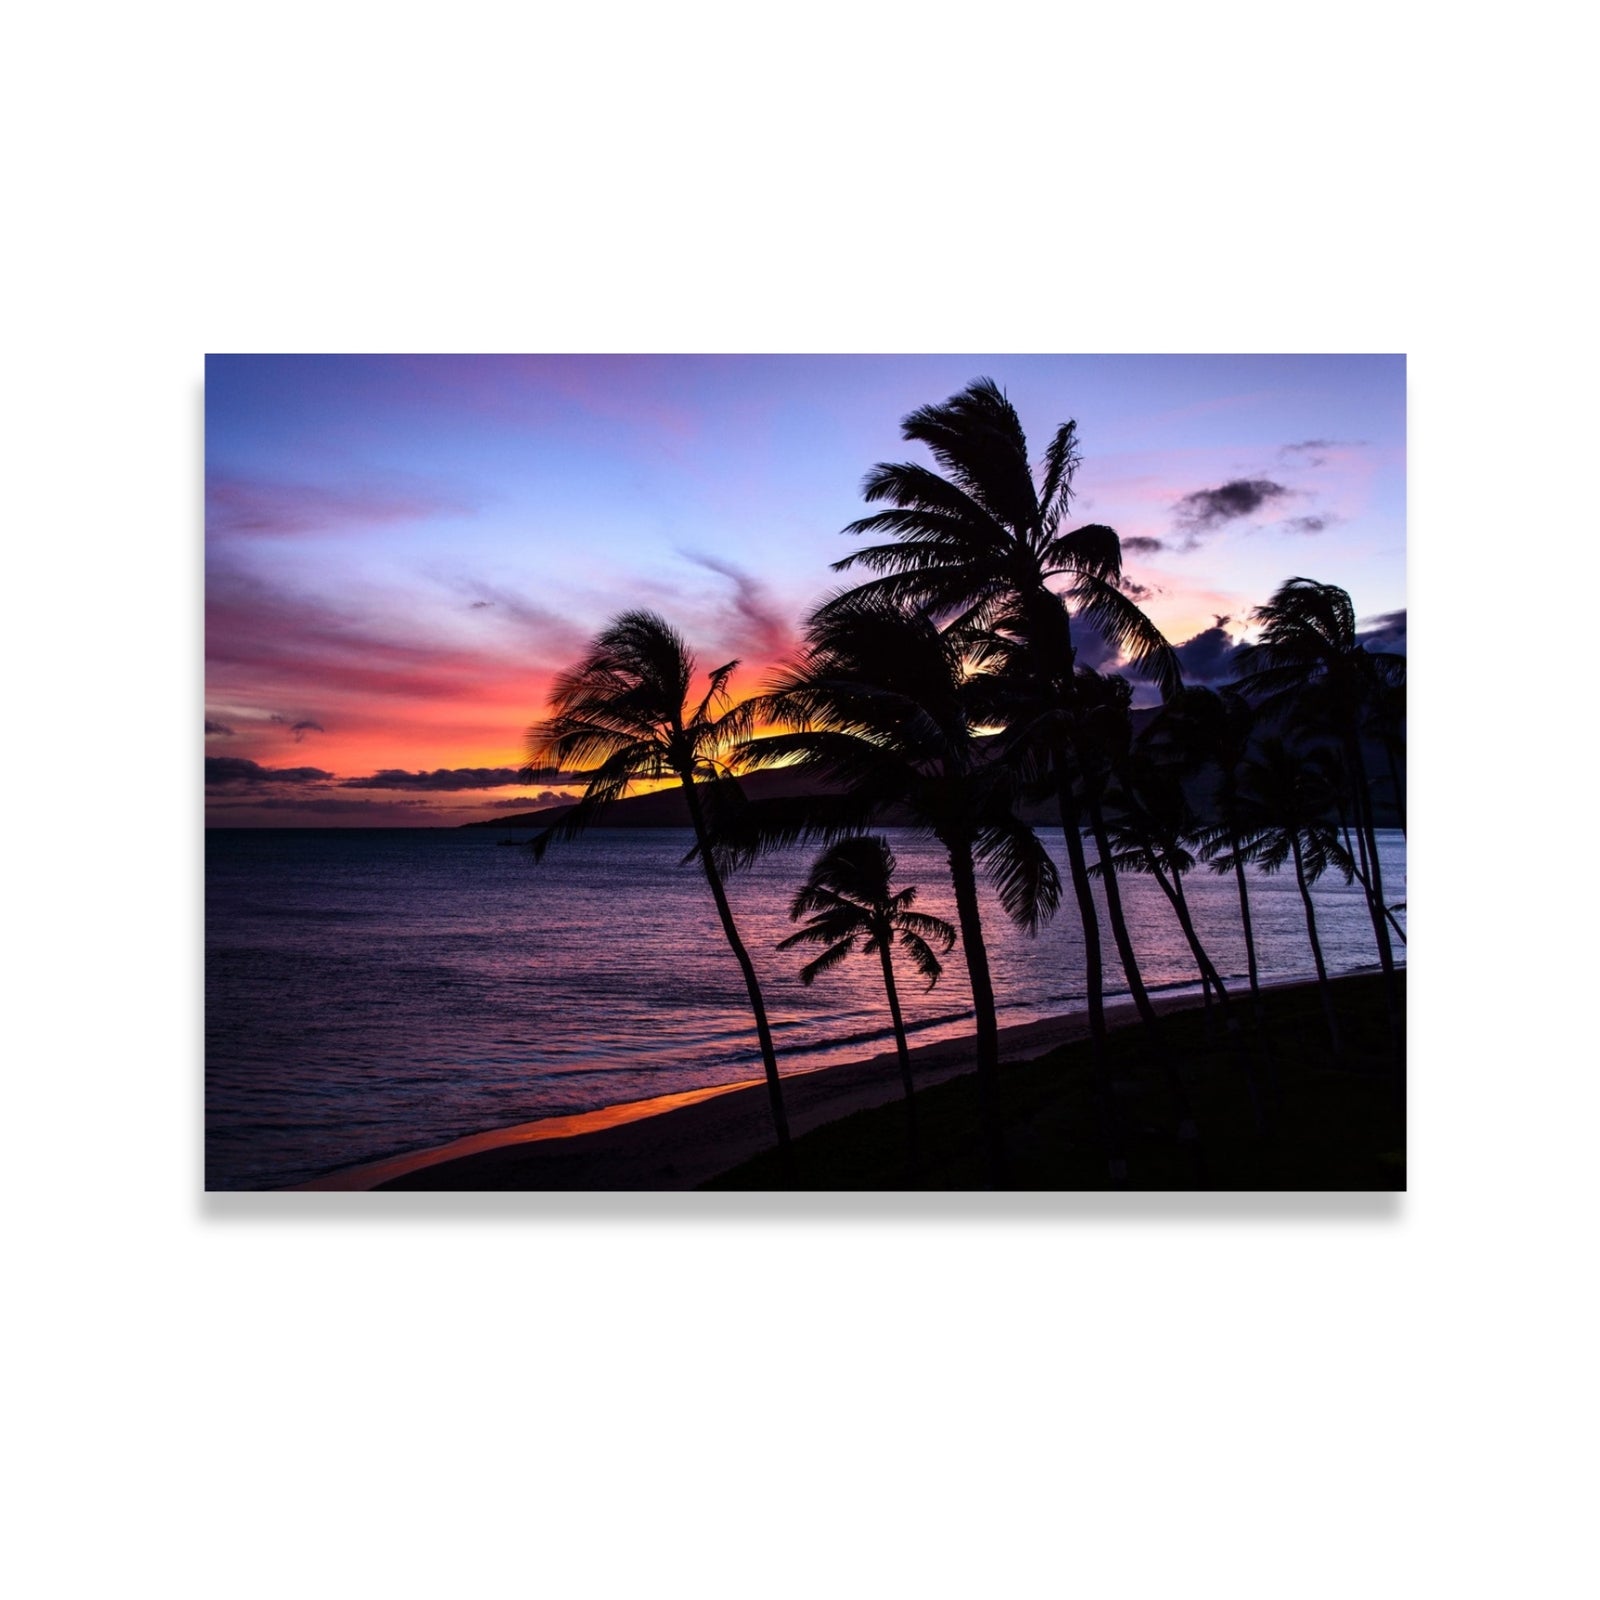 Pop-Up Mākeke - Maui Fine Art - Hawaiian Photo Print - "Hawaiian Purple Sunset" by Stan Jones